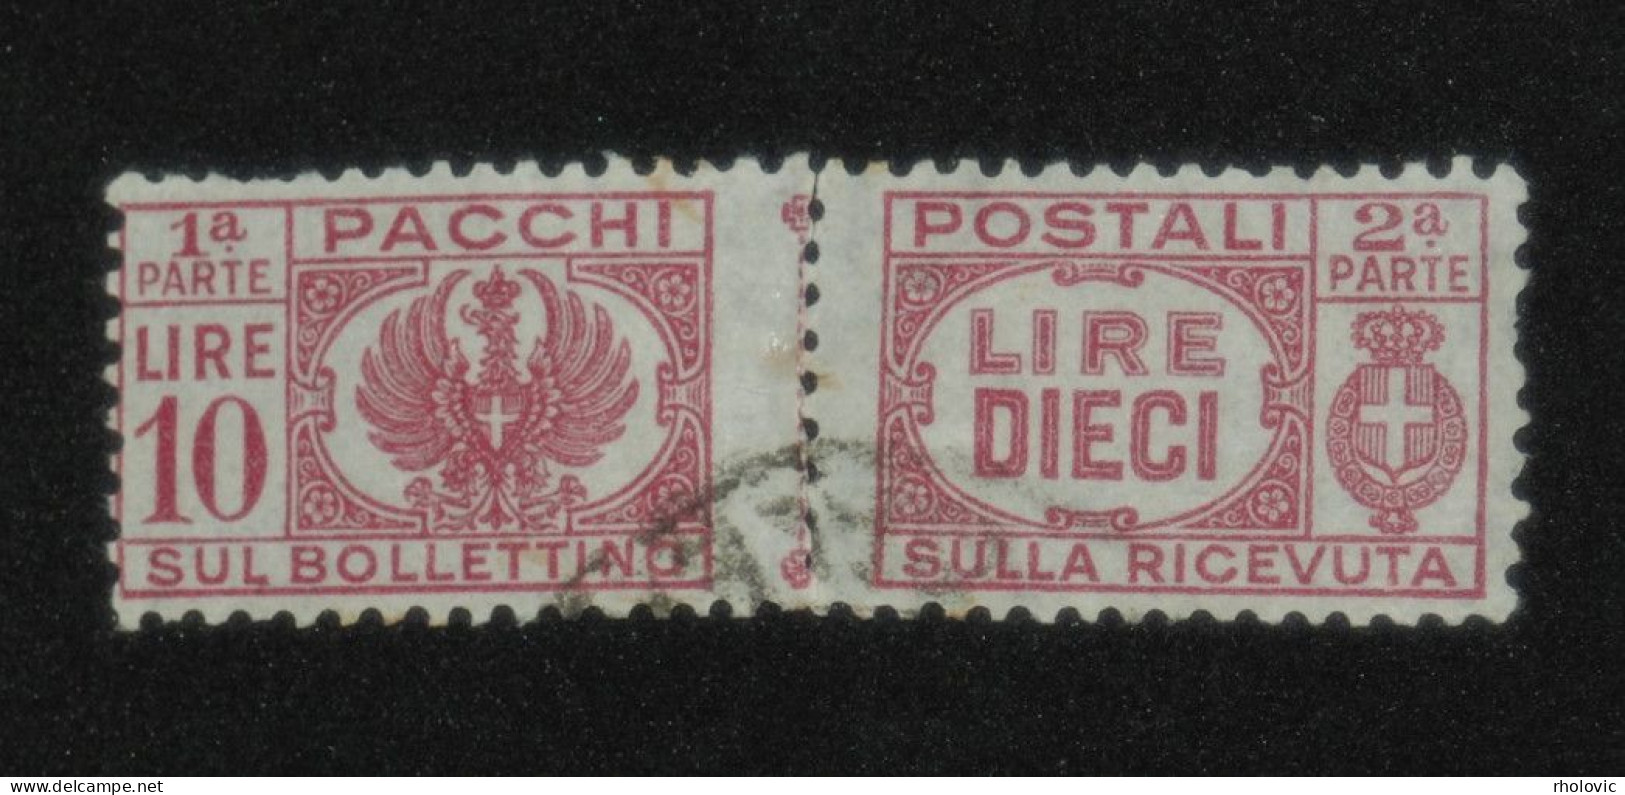 ITALY 1946, Parcel, 10 Lire, Lilac, Mi #P64, Used, CV: €120 - Paquetes Postales